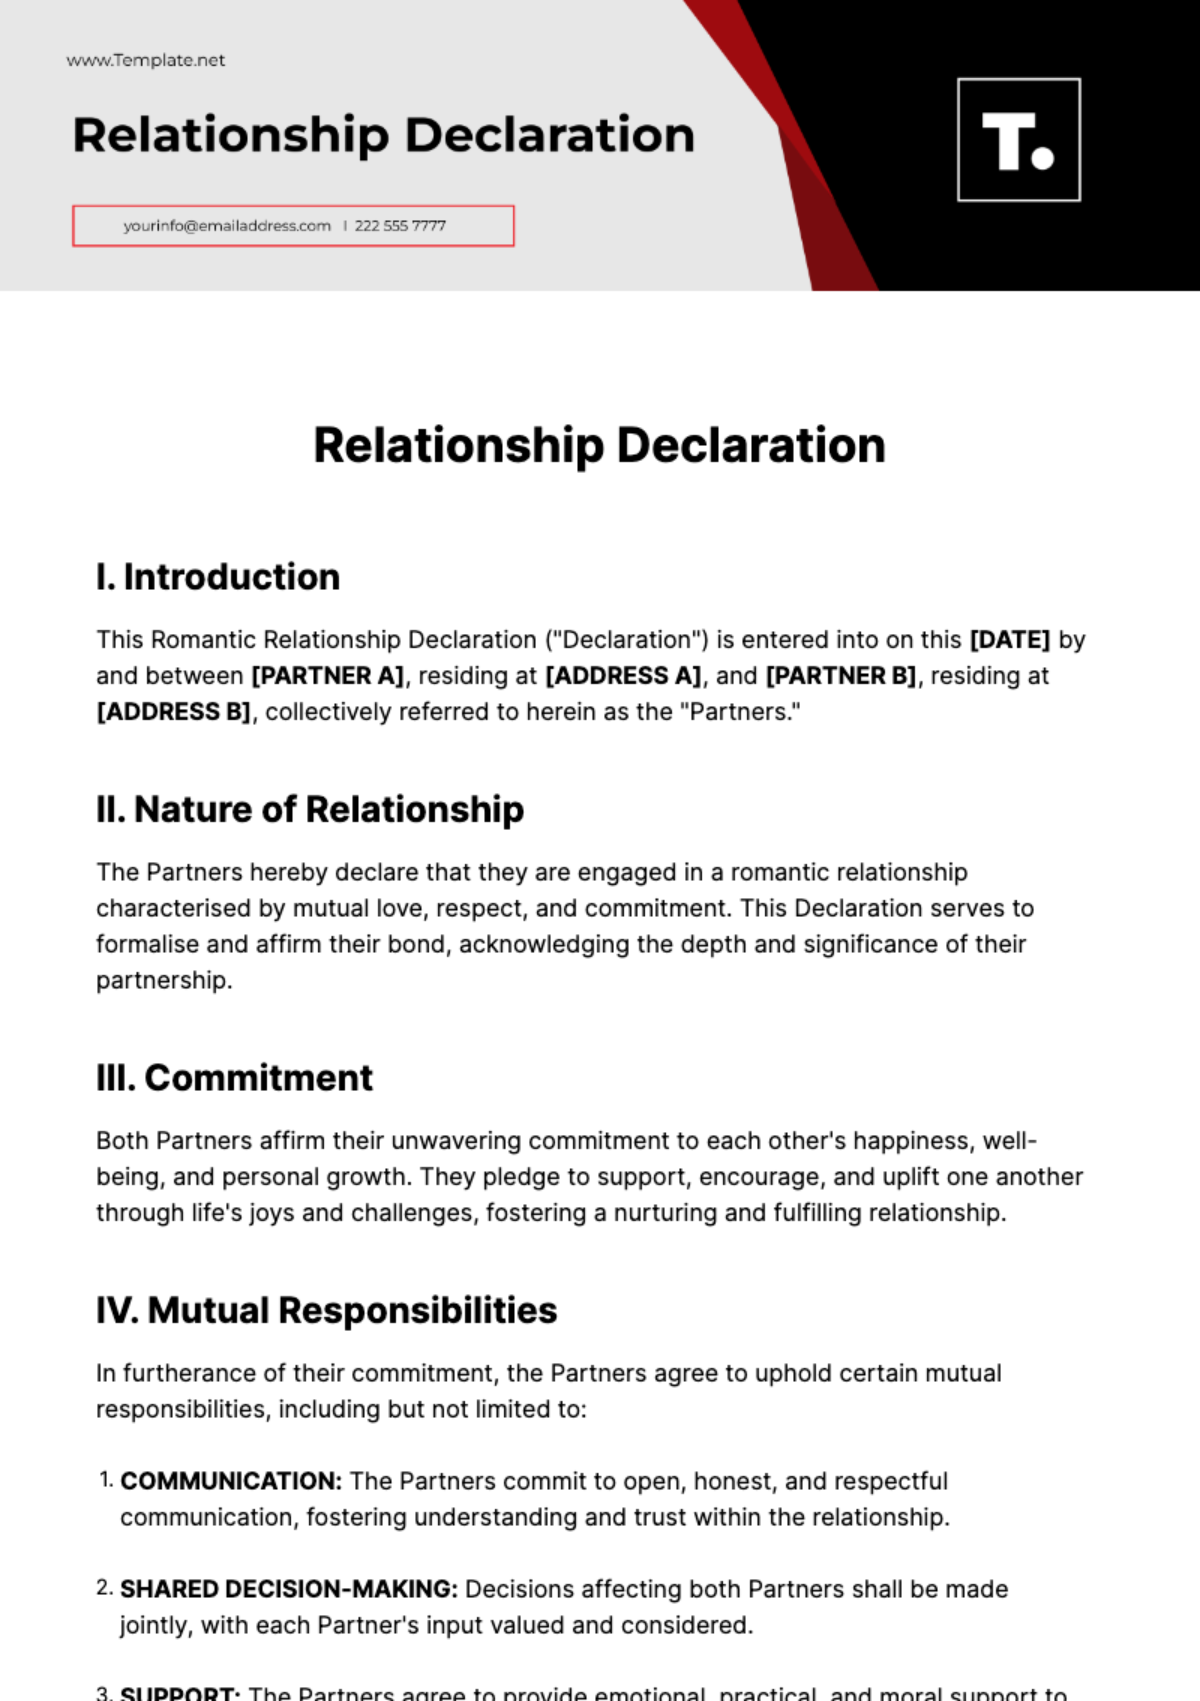 Free Relationship Declaration Template